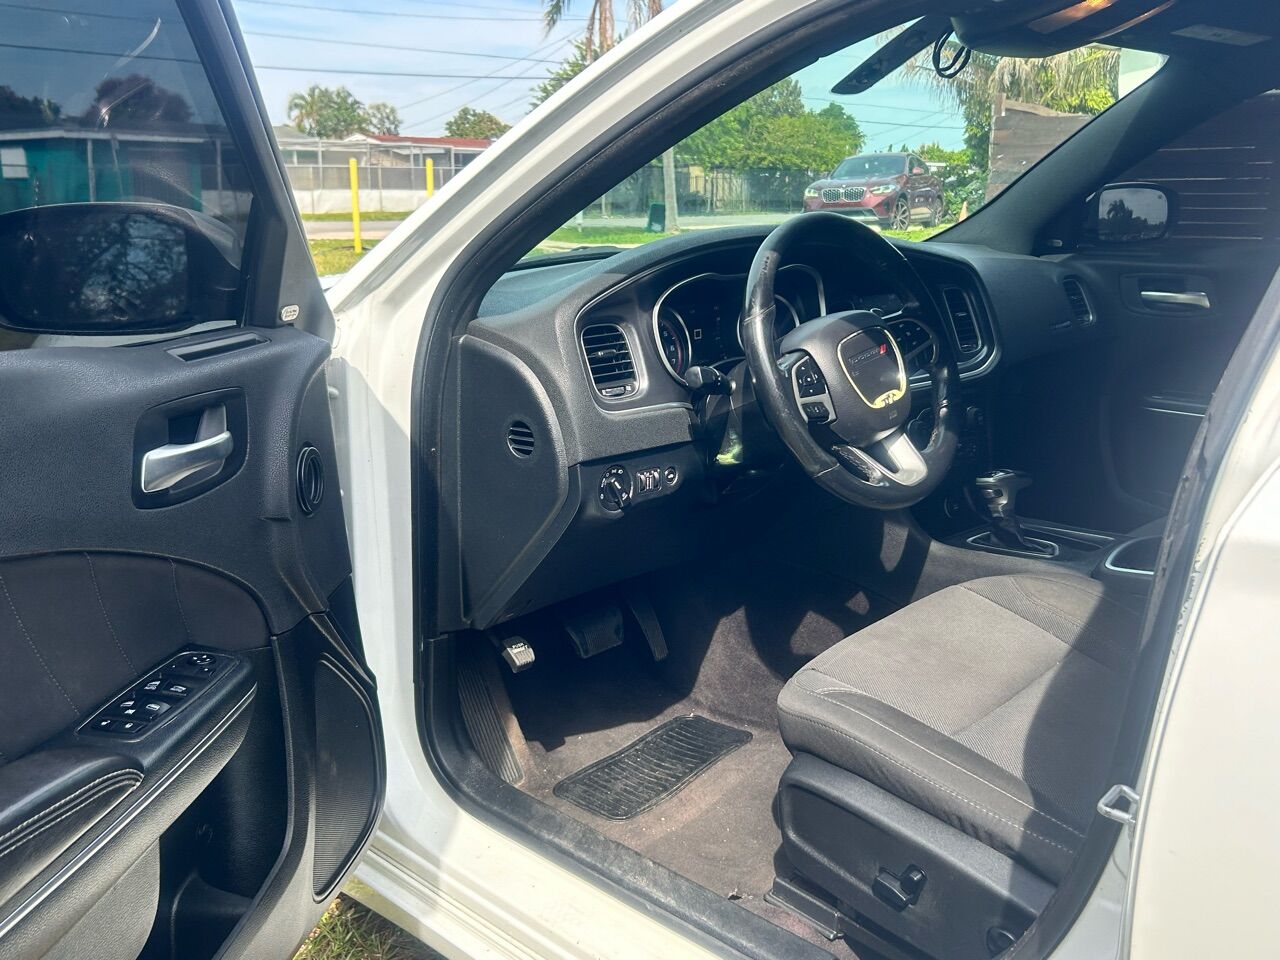 2018 DODGE Charger Sedan - $17,995